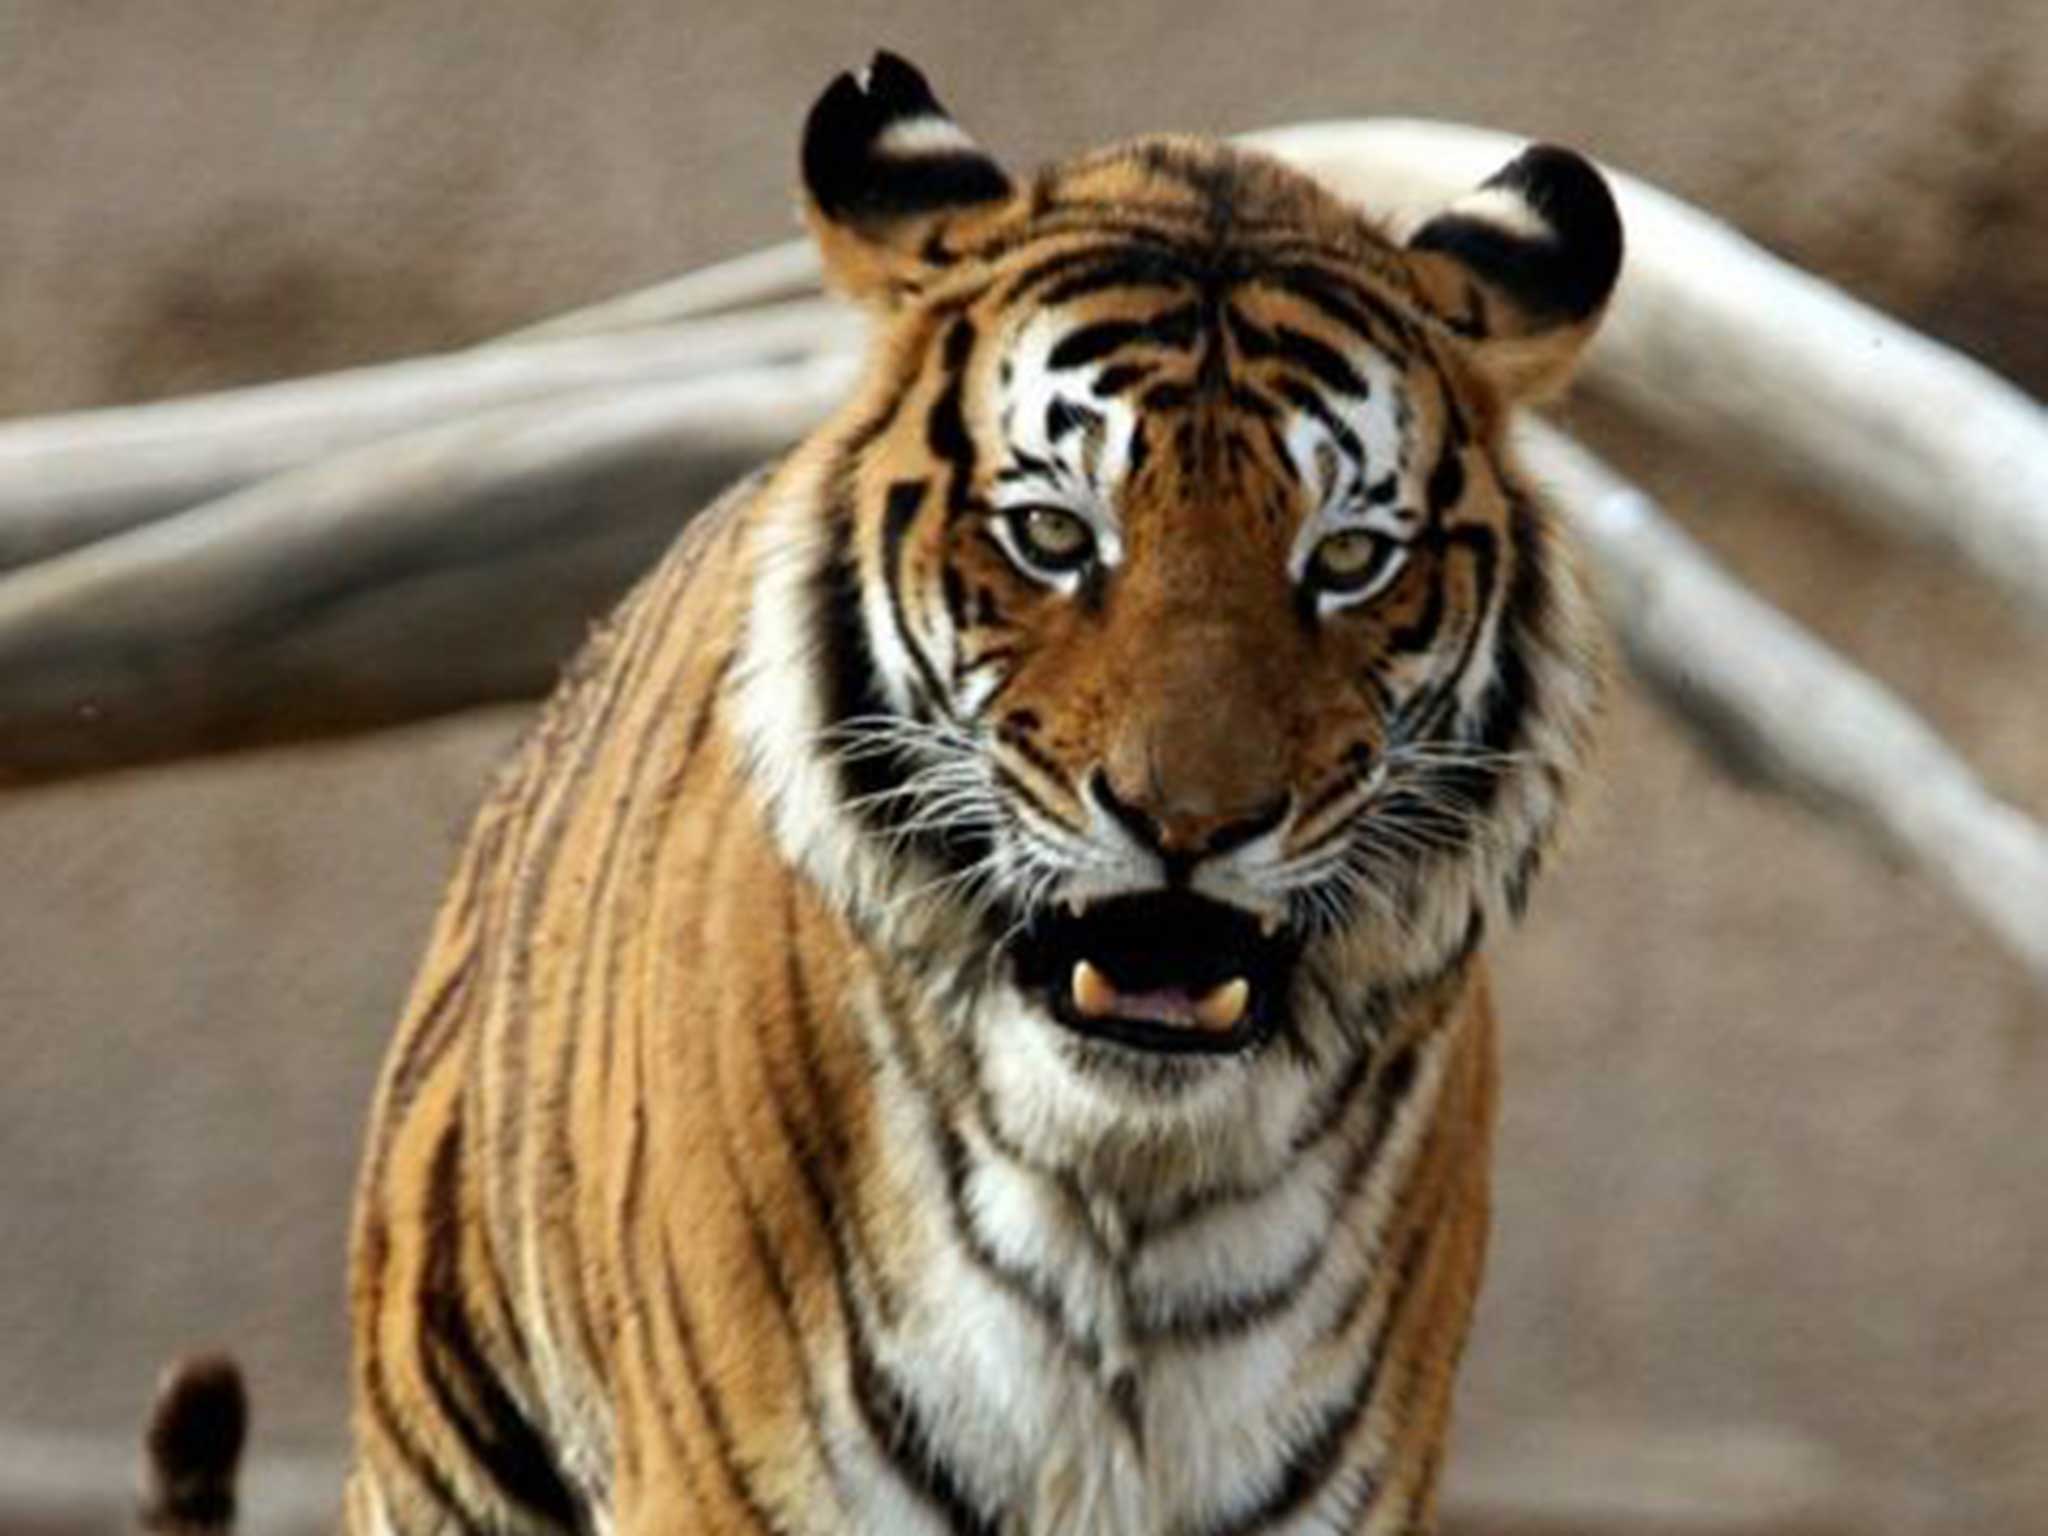 A Bengal tiger in Saudi Arabia